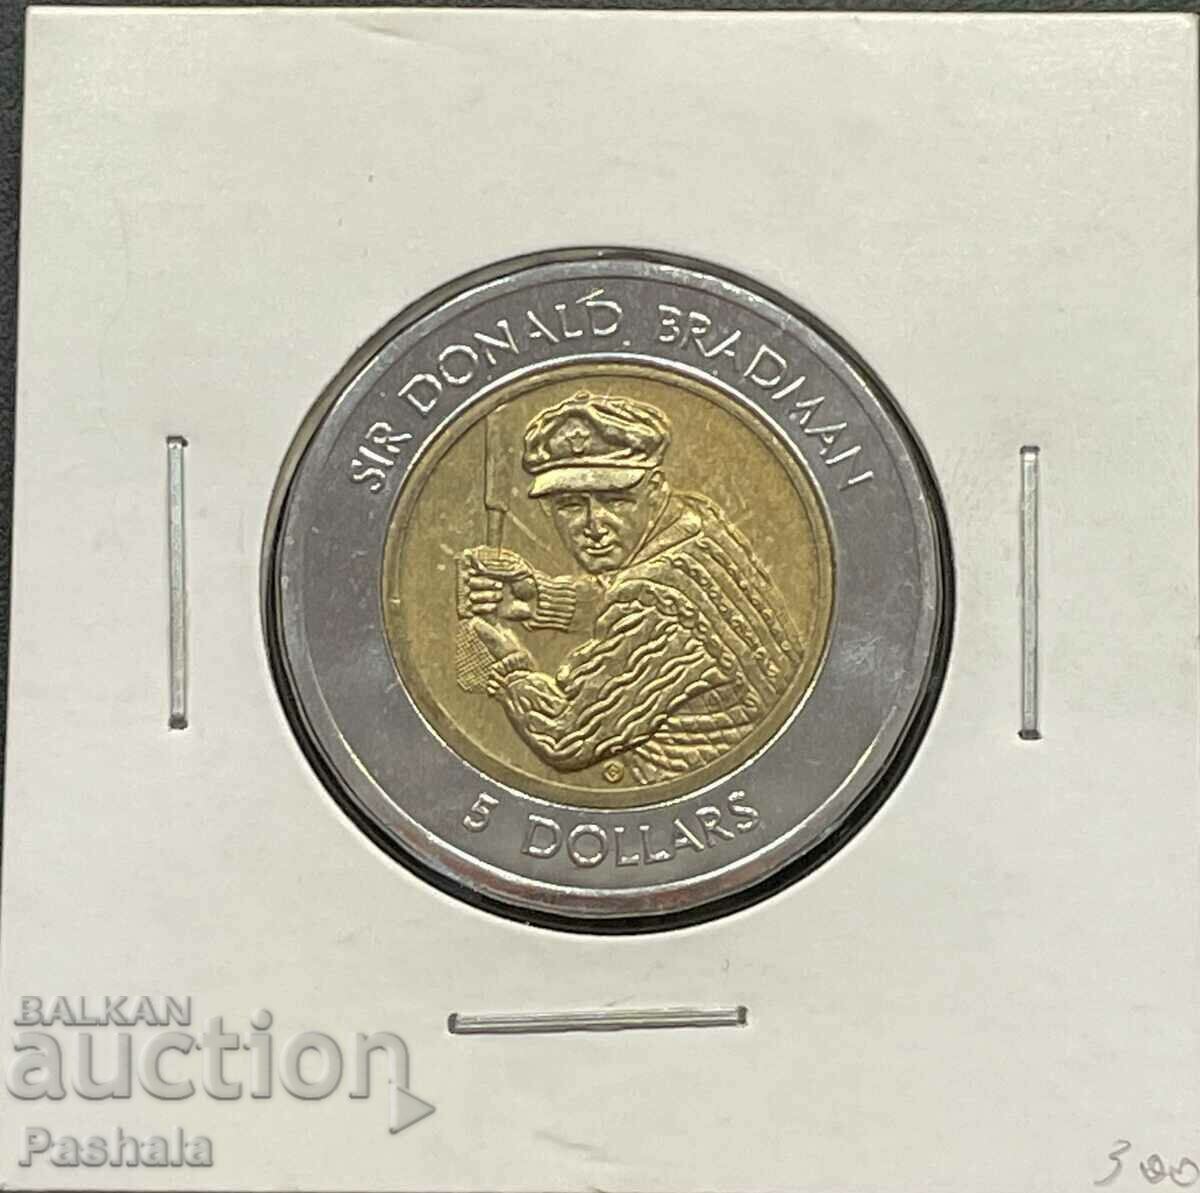 Australia 5 USD 1996